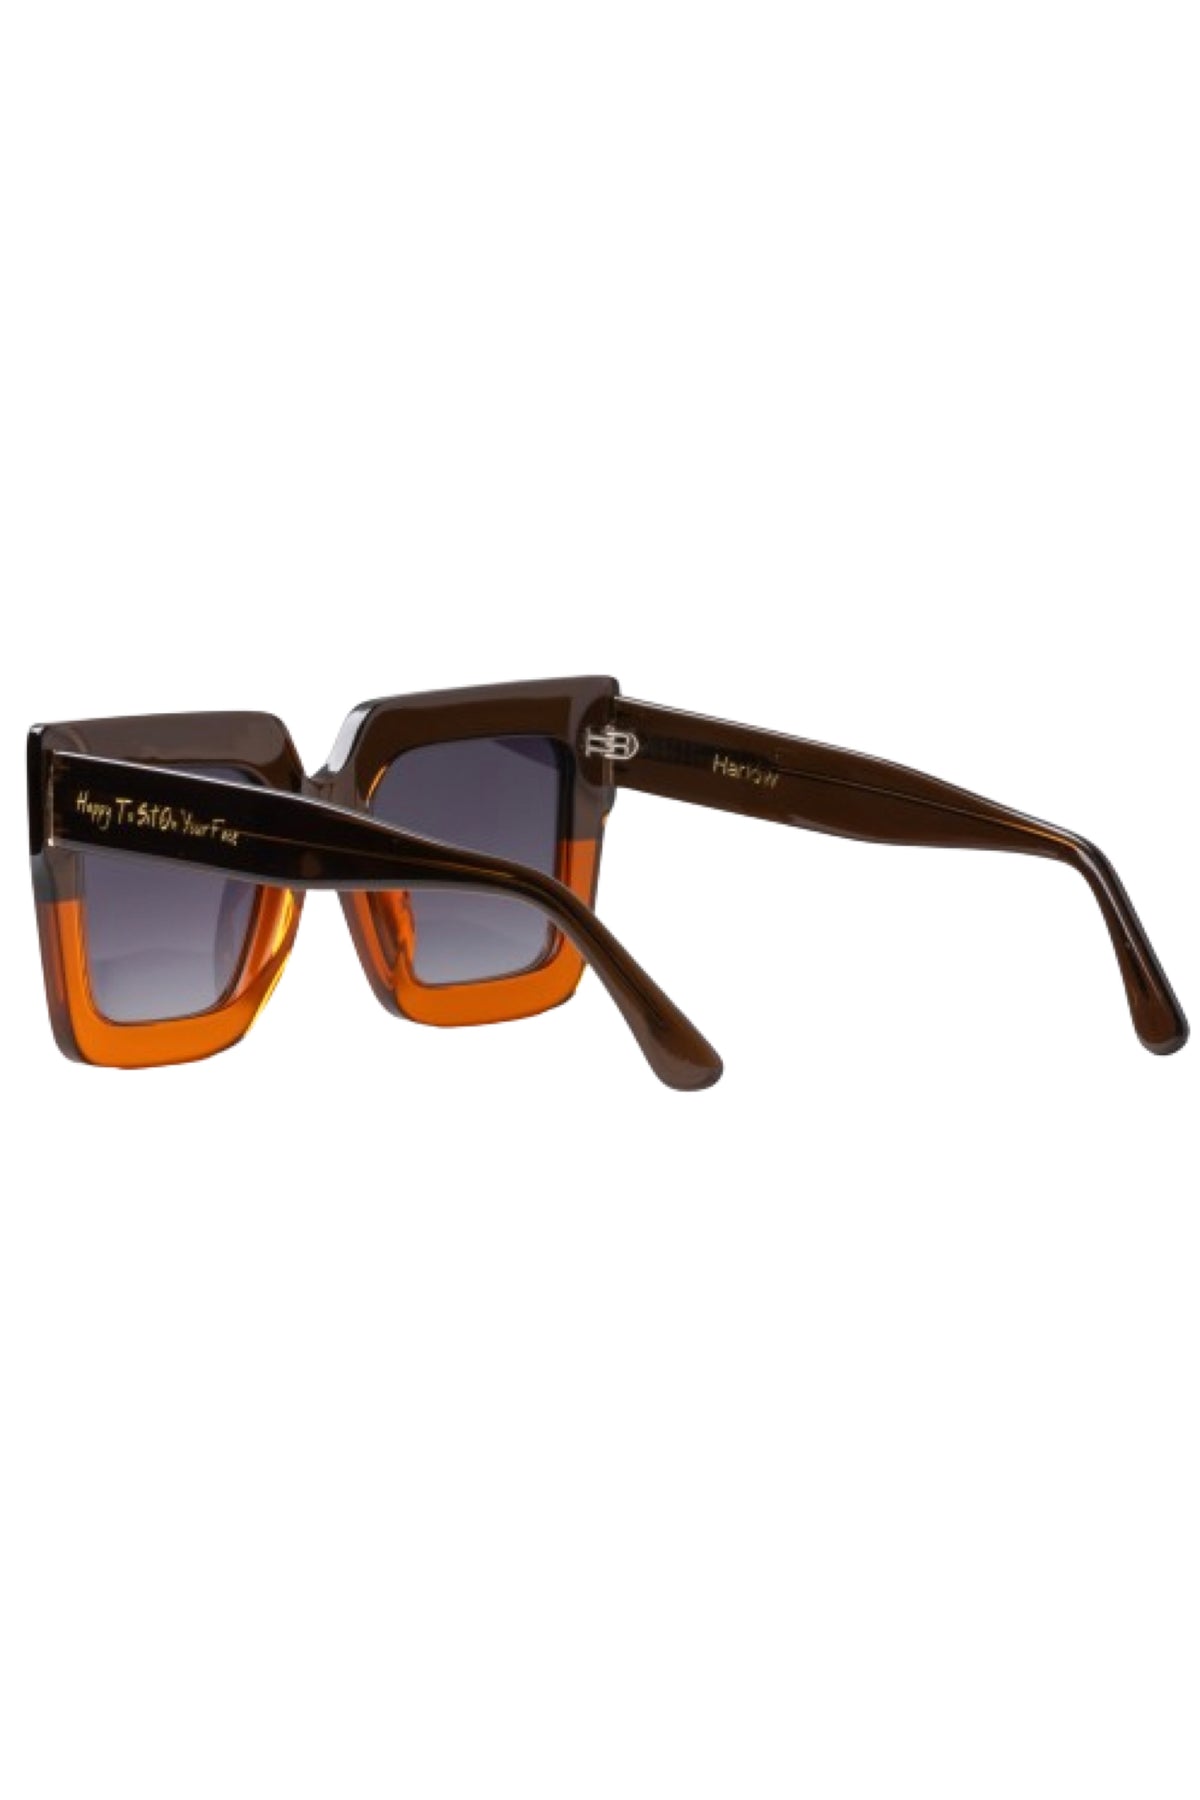 Harlow Burnt Orange Sunglasses